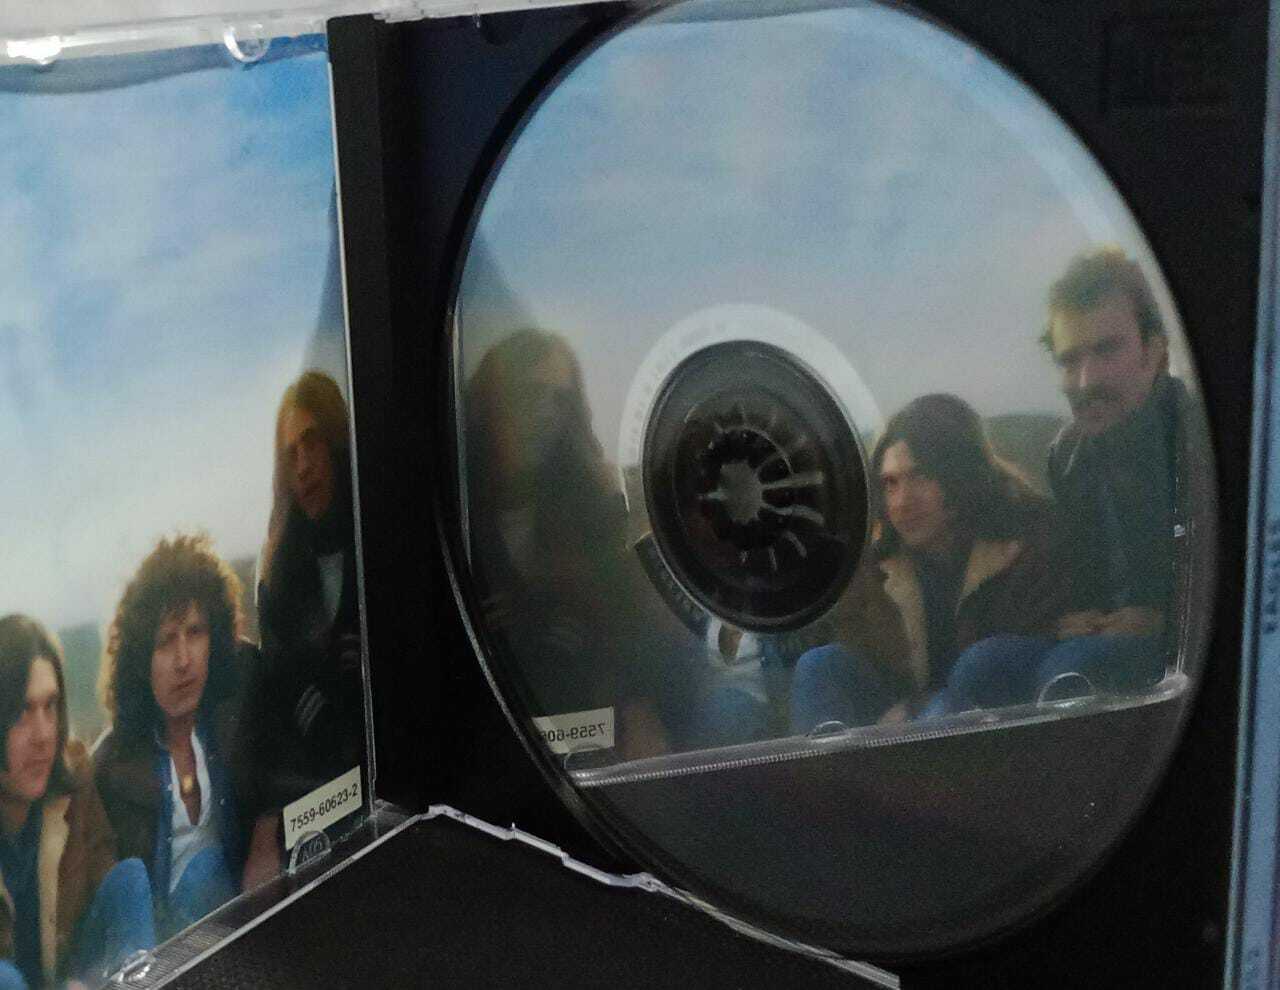 CD - Eagles - 1972 (Germany)